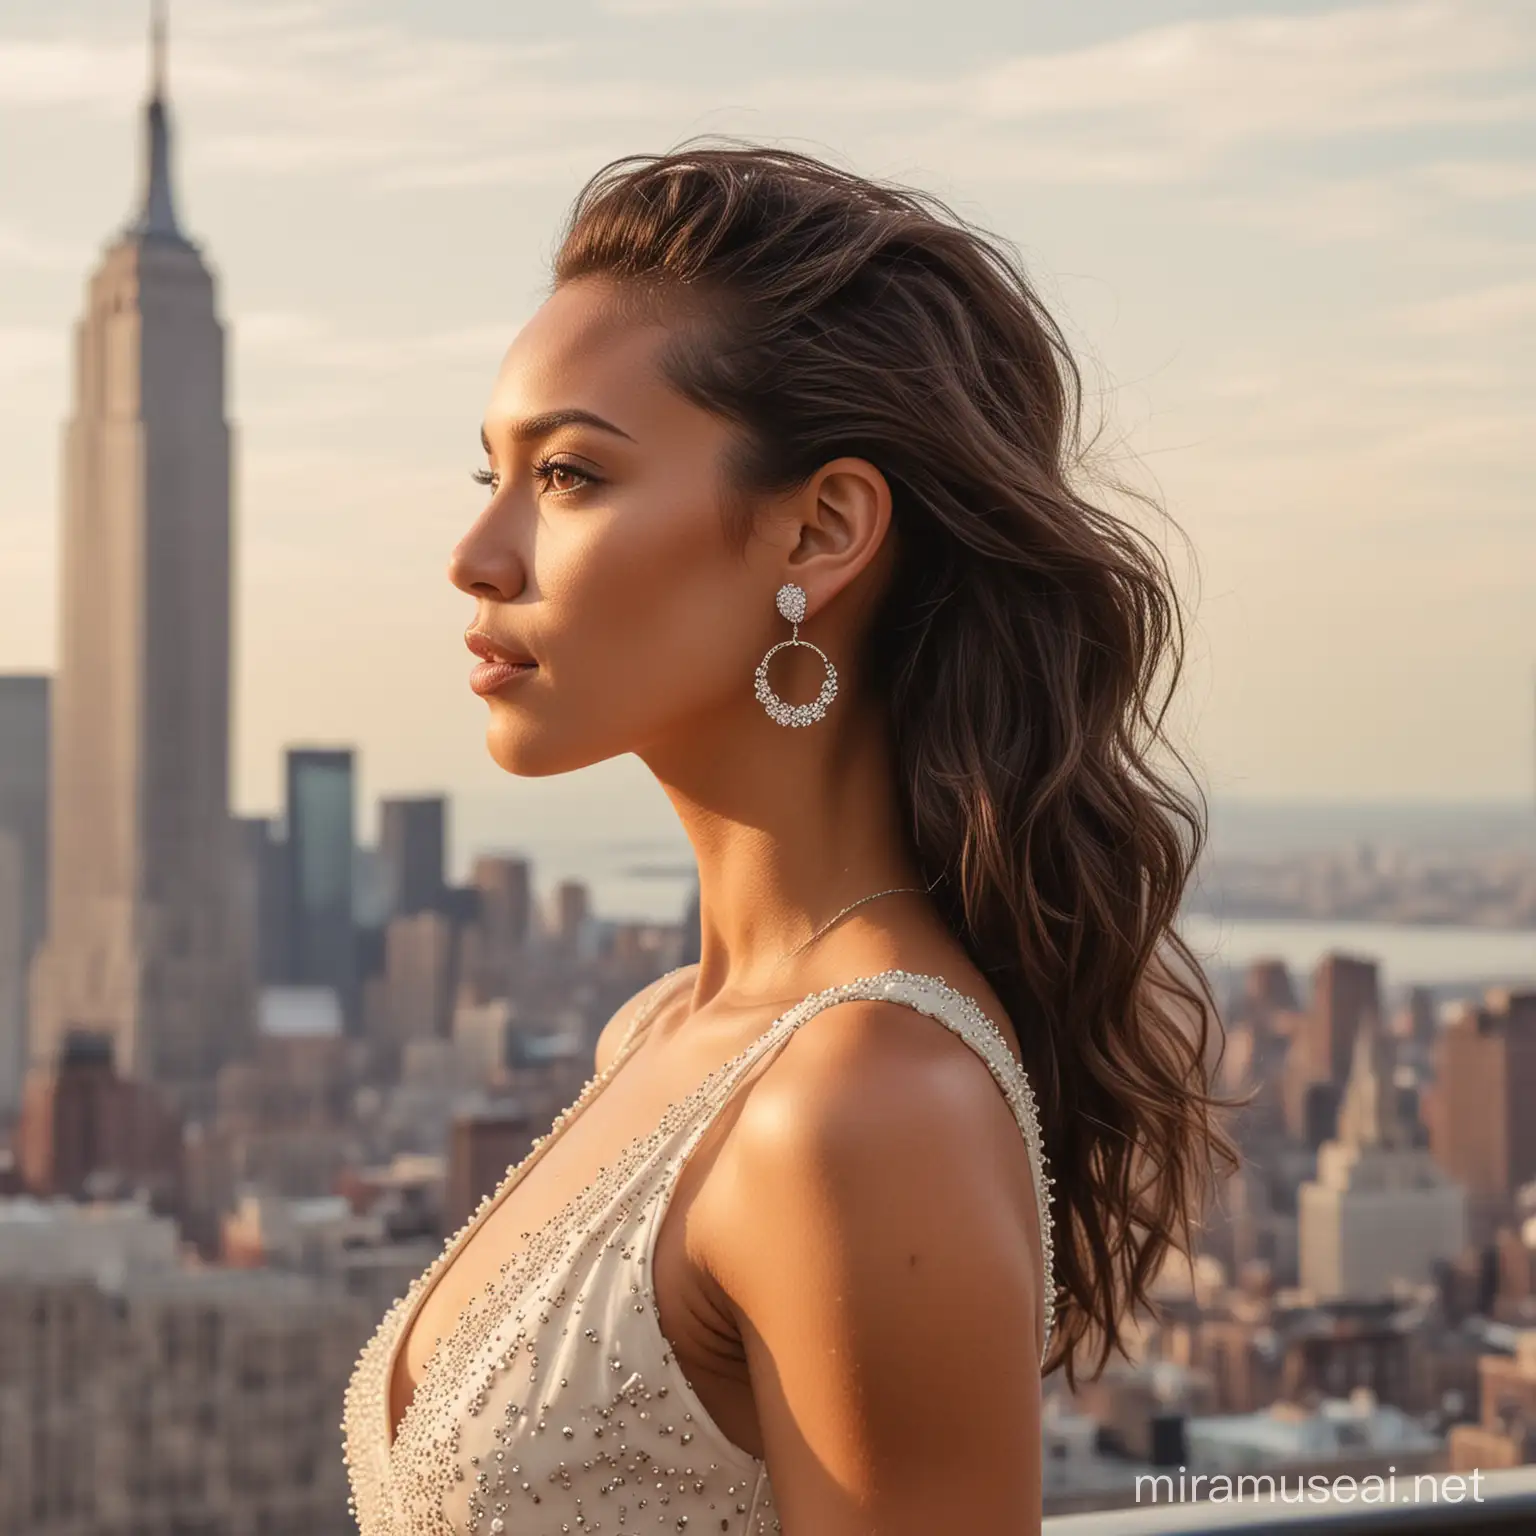 Professional Mixed Race Woman Modeling Elegant Cream Earrings in New York City Photoshoot